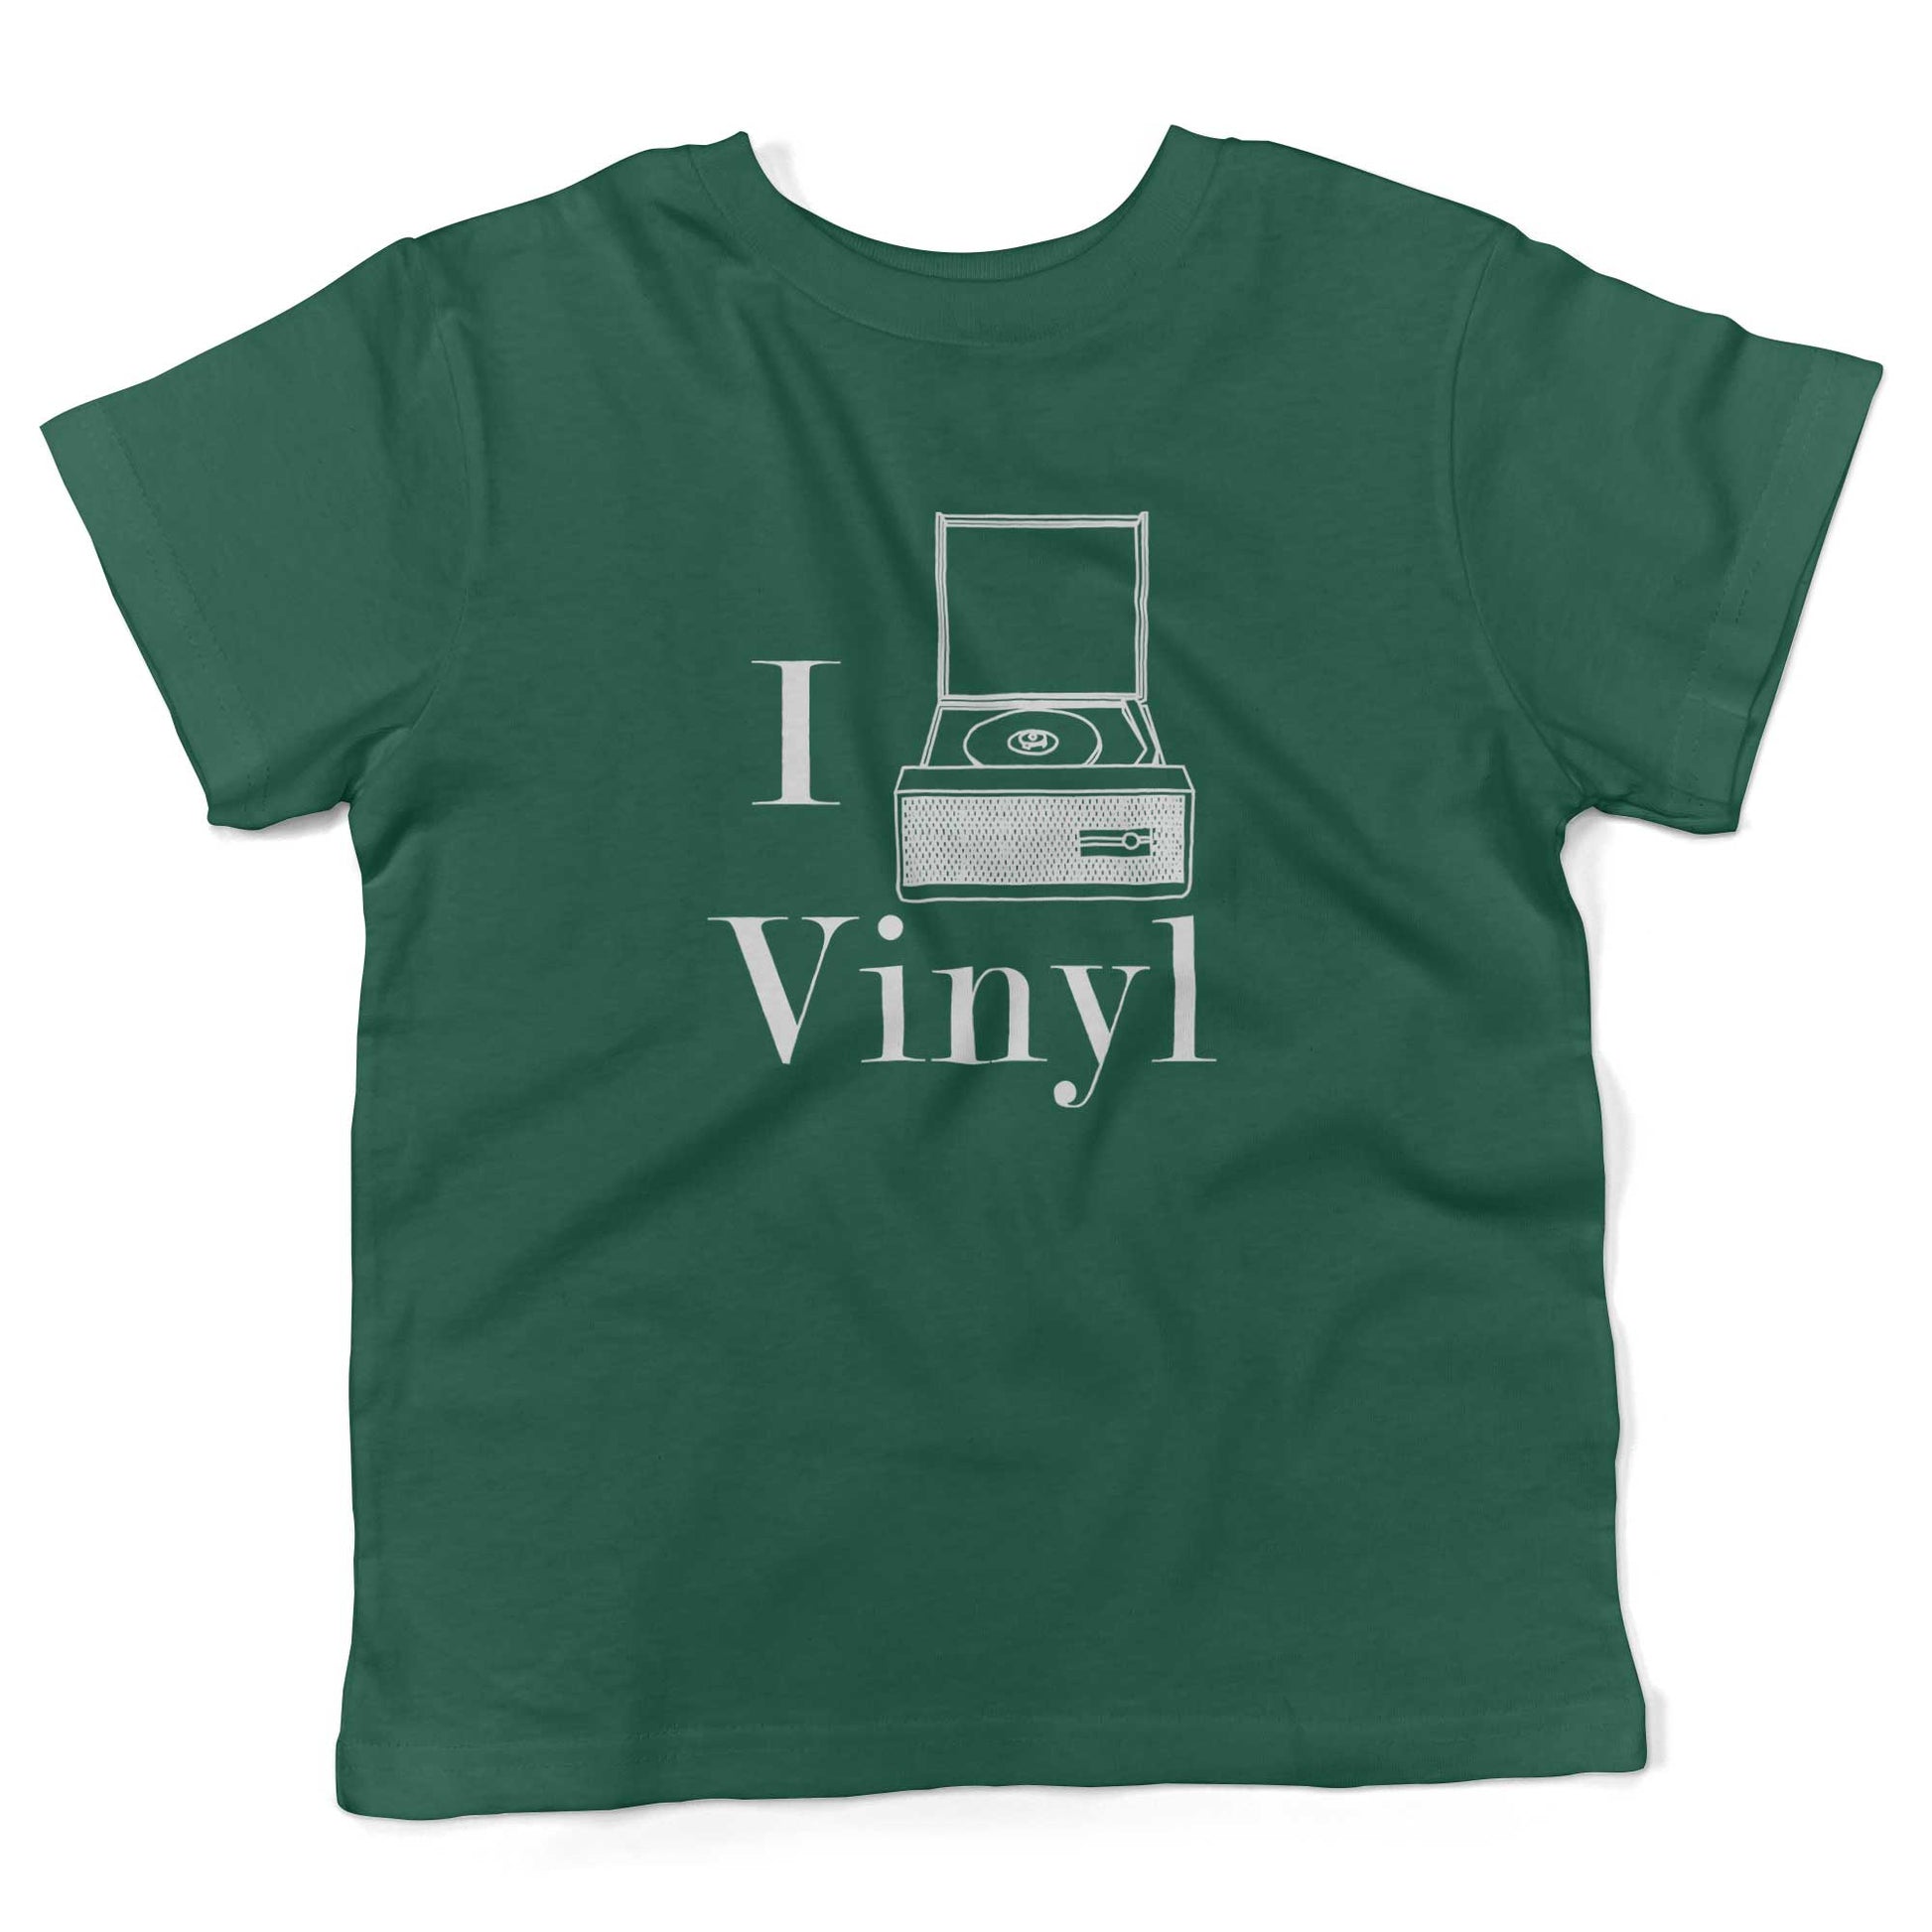 I Play Vinyl Toddler Shirt-Kelly Green-2T